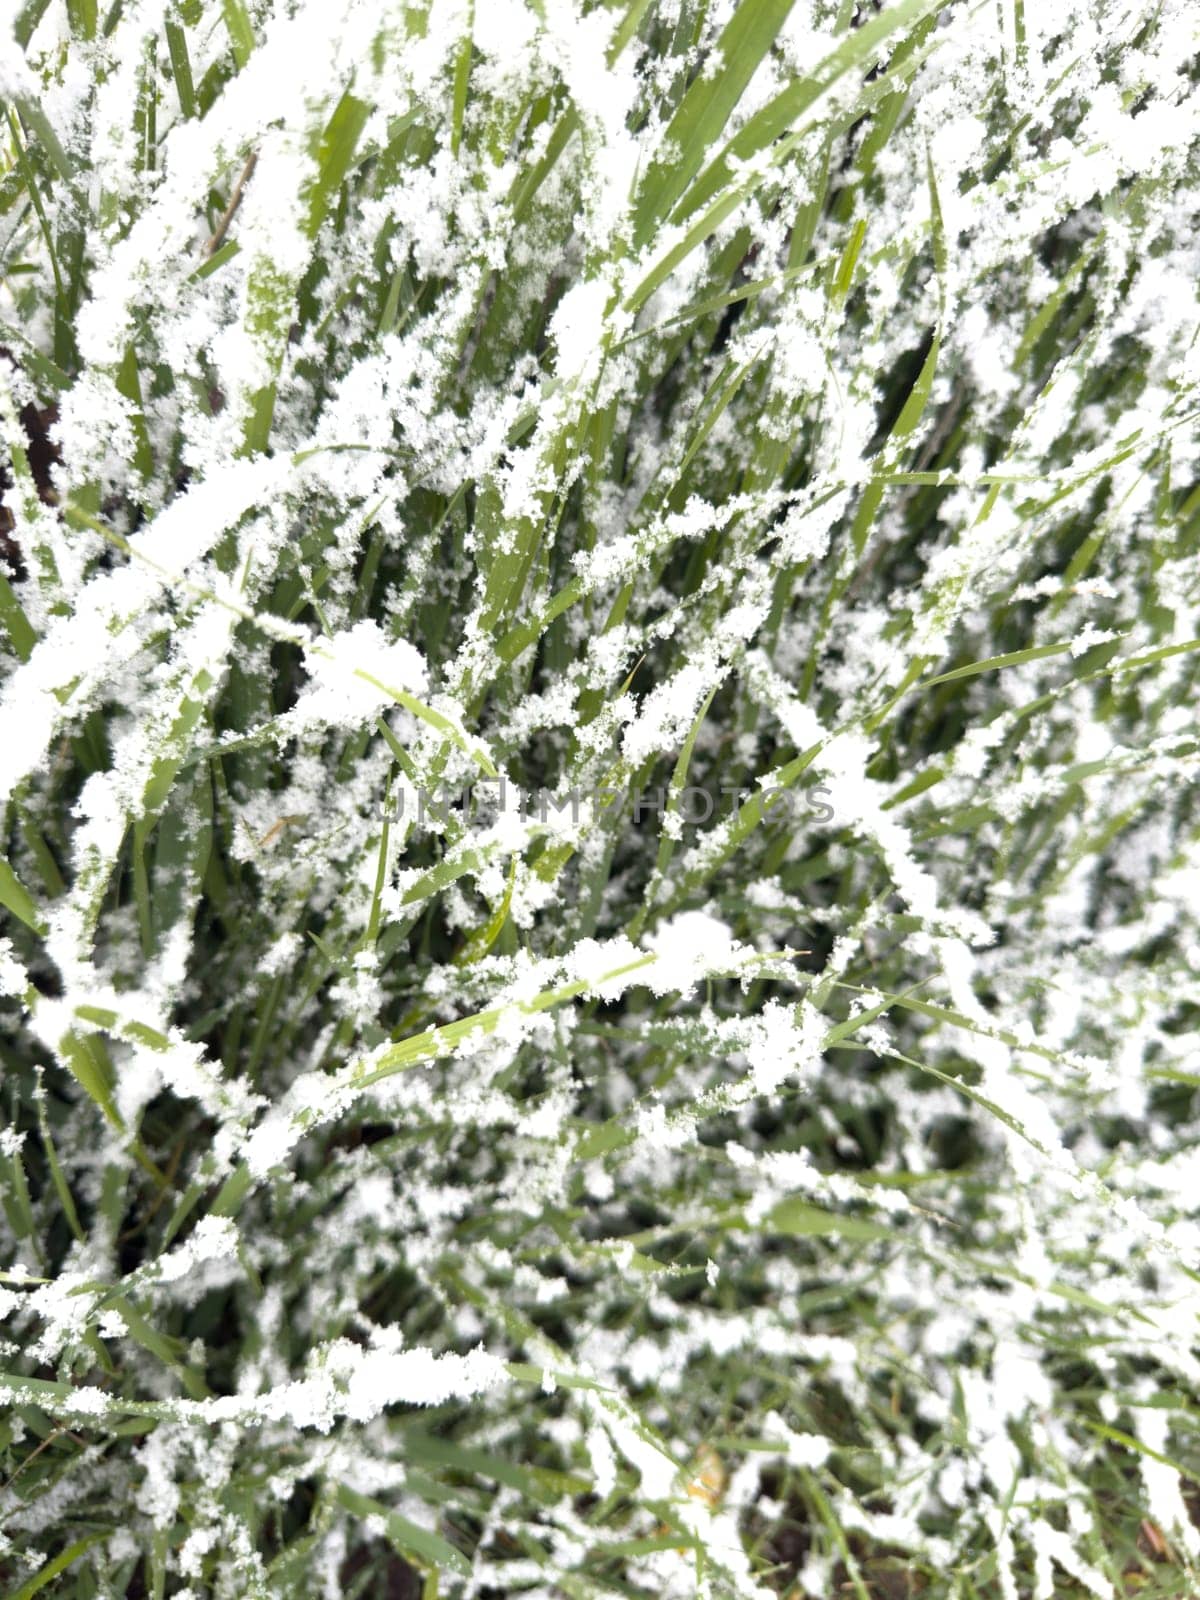 white snow lies on green grass